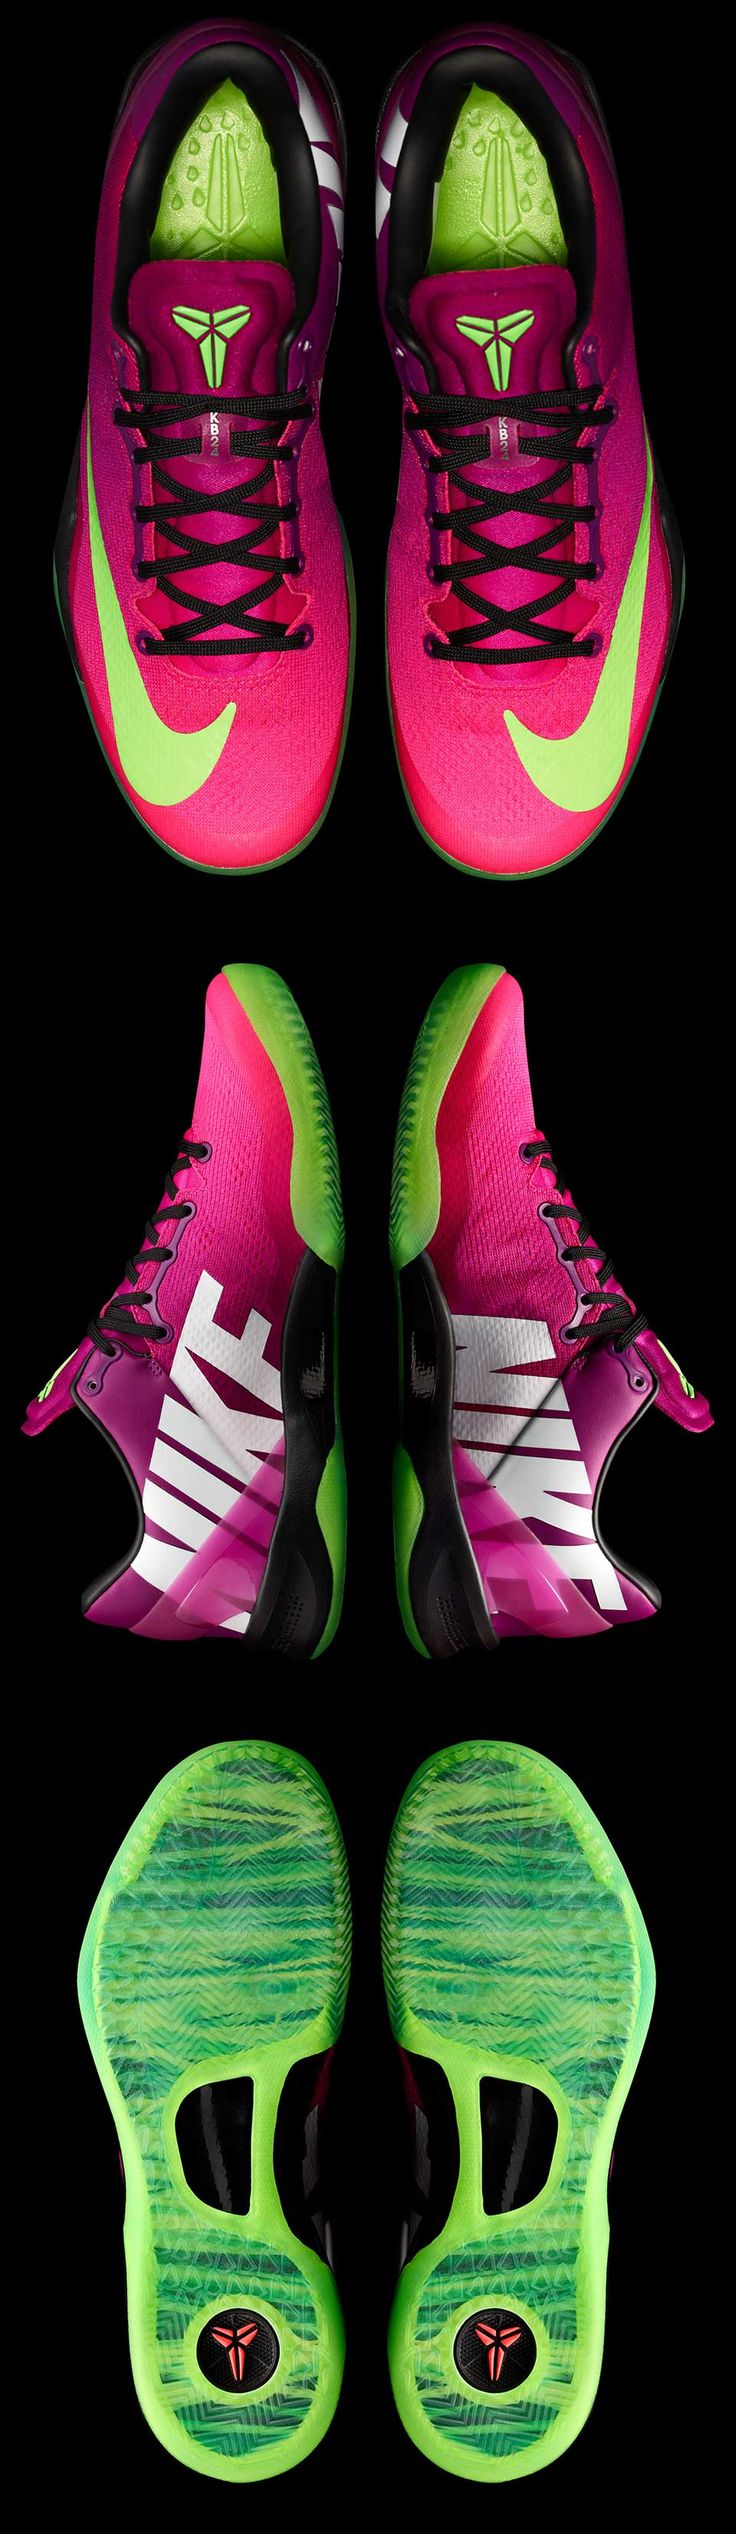 Nike Kobe Mambacurial basketball shoe